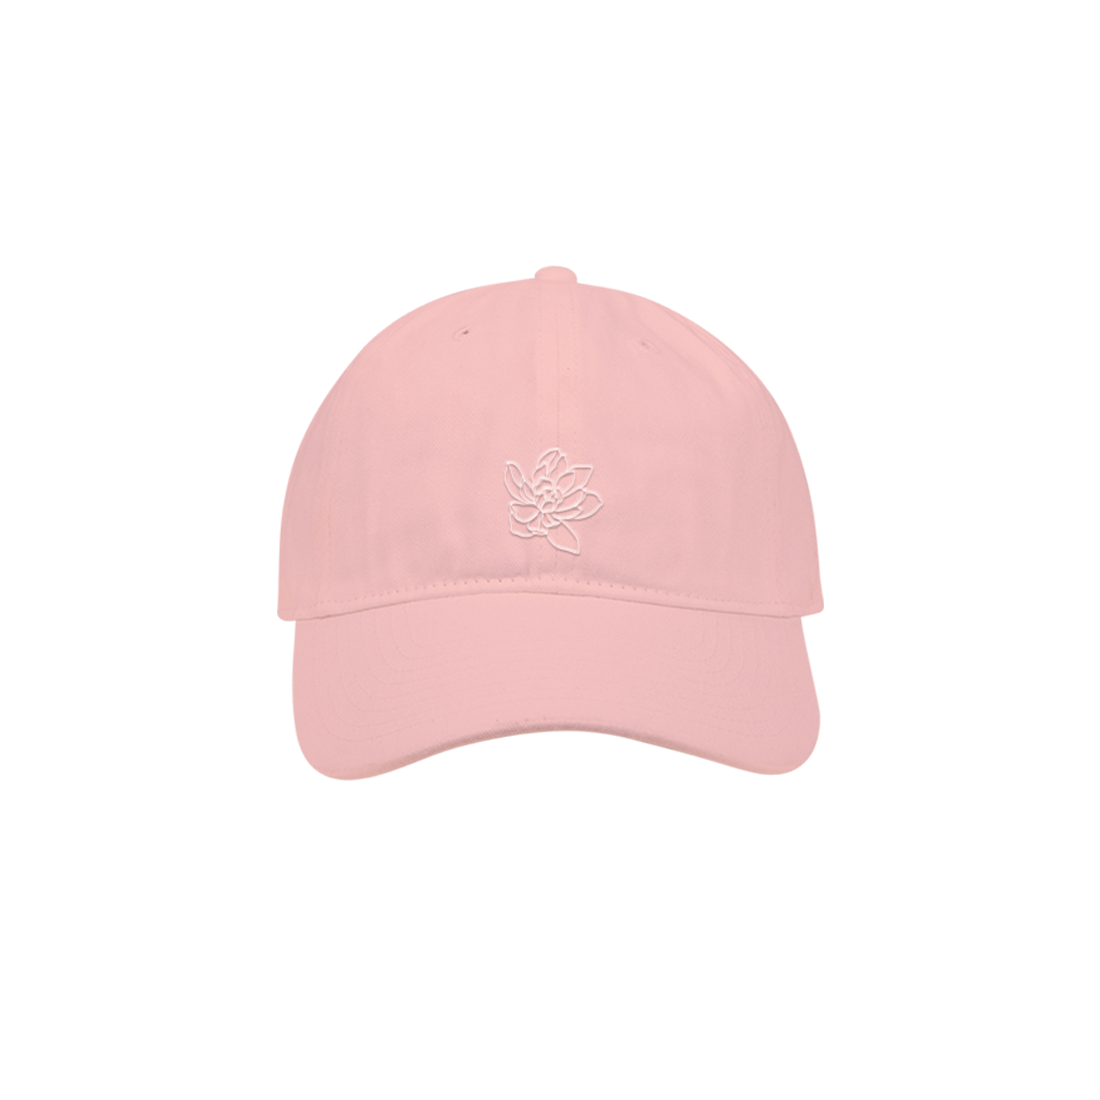 Fond de chapeau rose de baseball Transparent